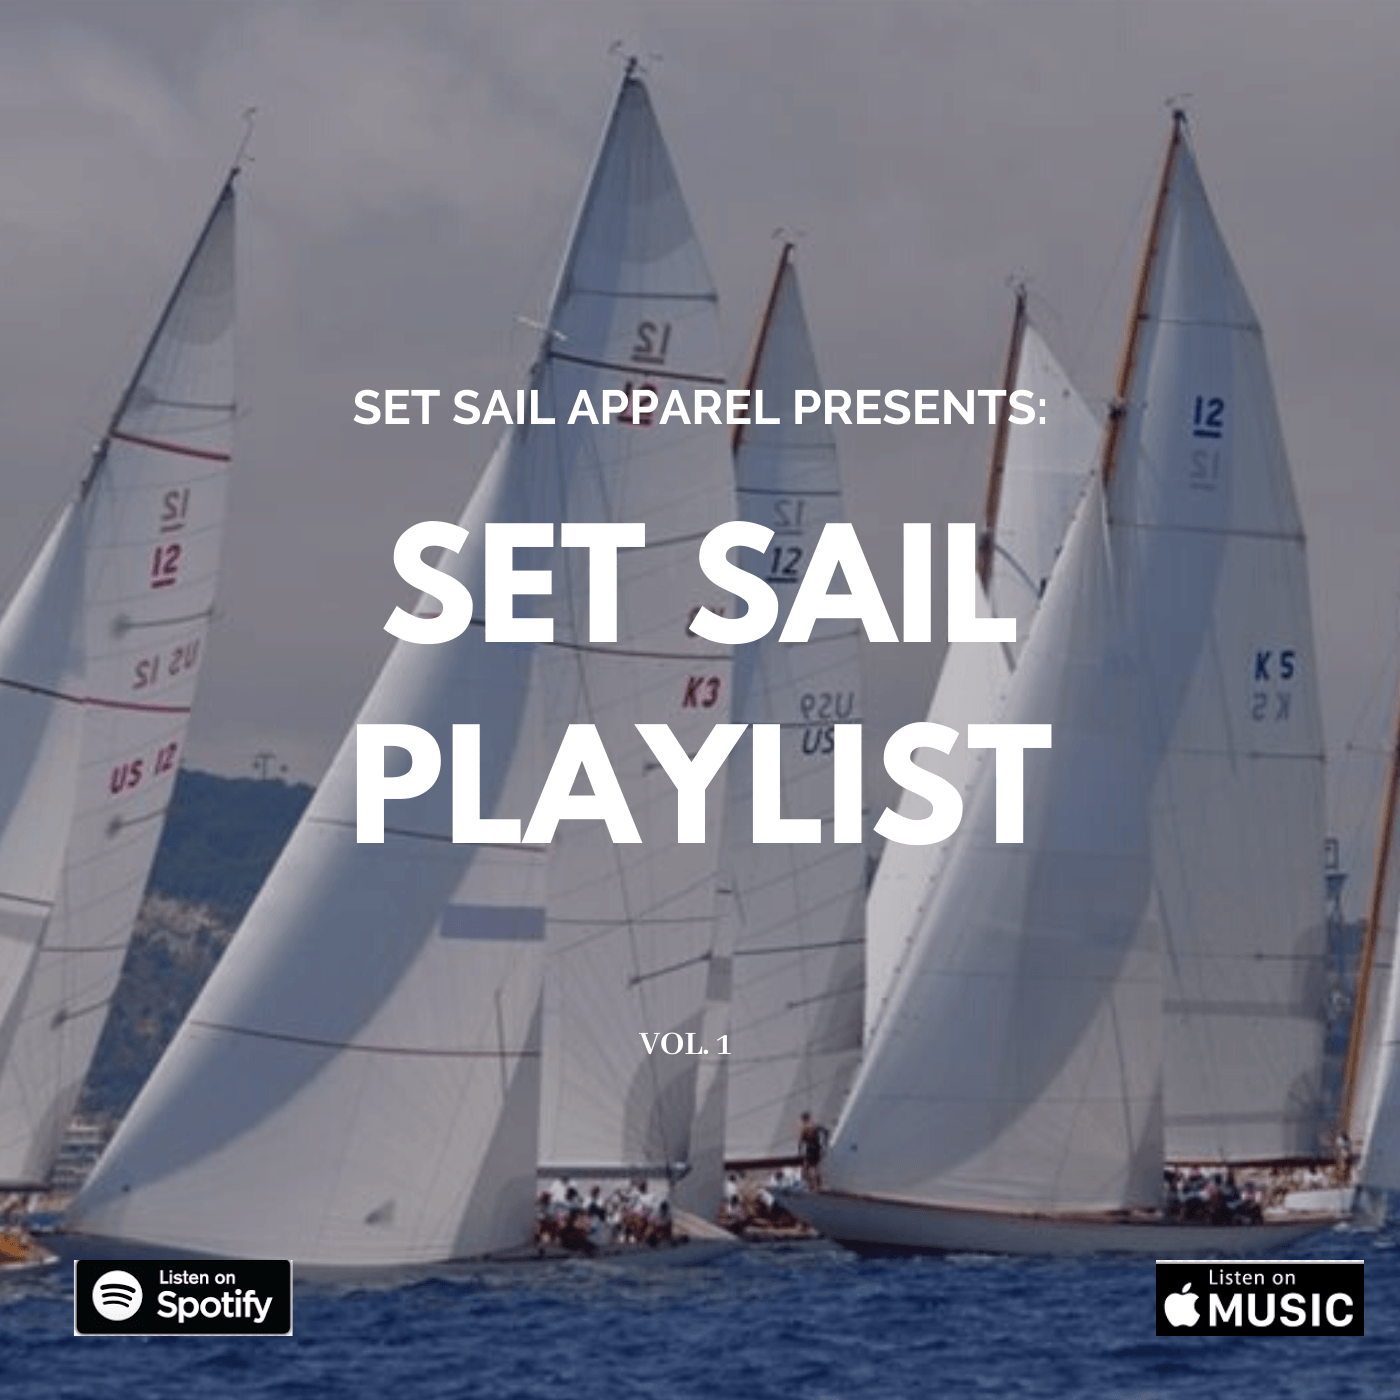 Set Sail Apparel Vol.1 Playlist - SET SAIL APPAREL